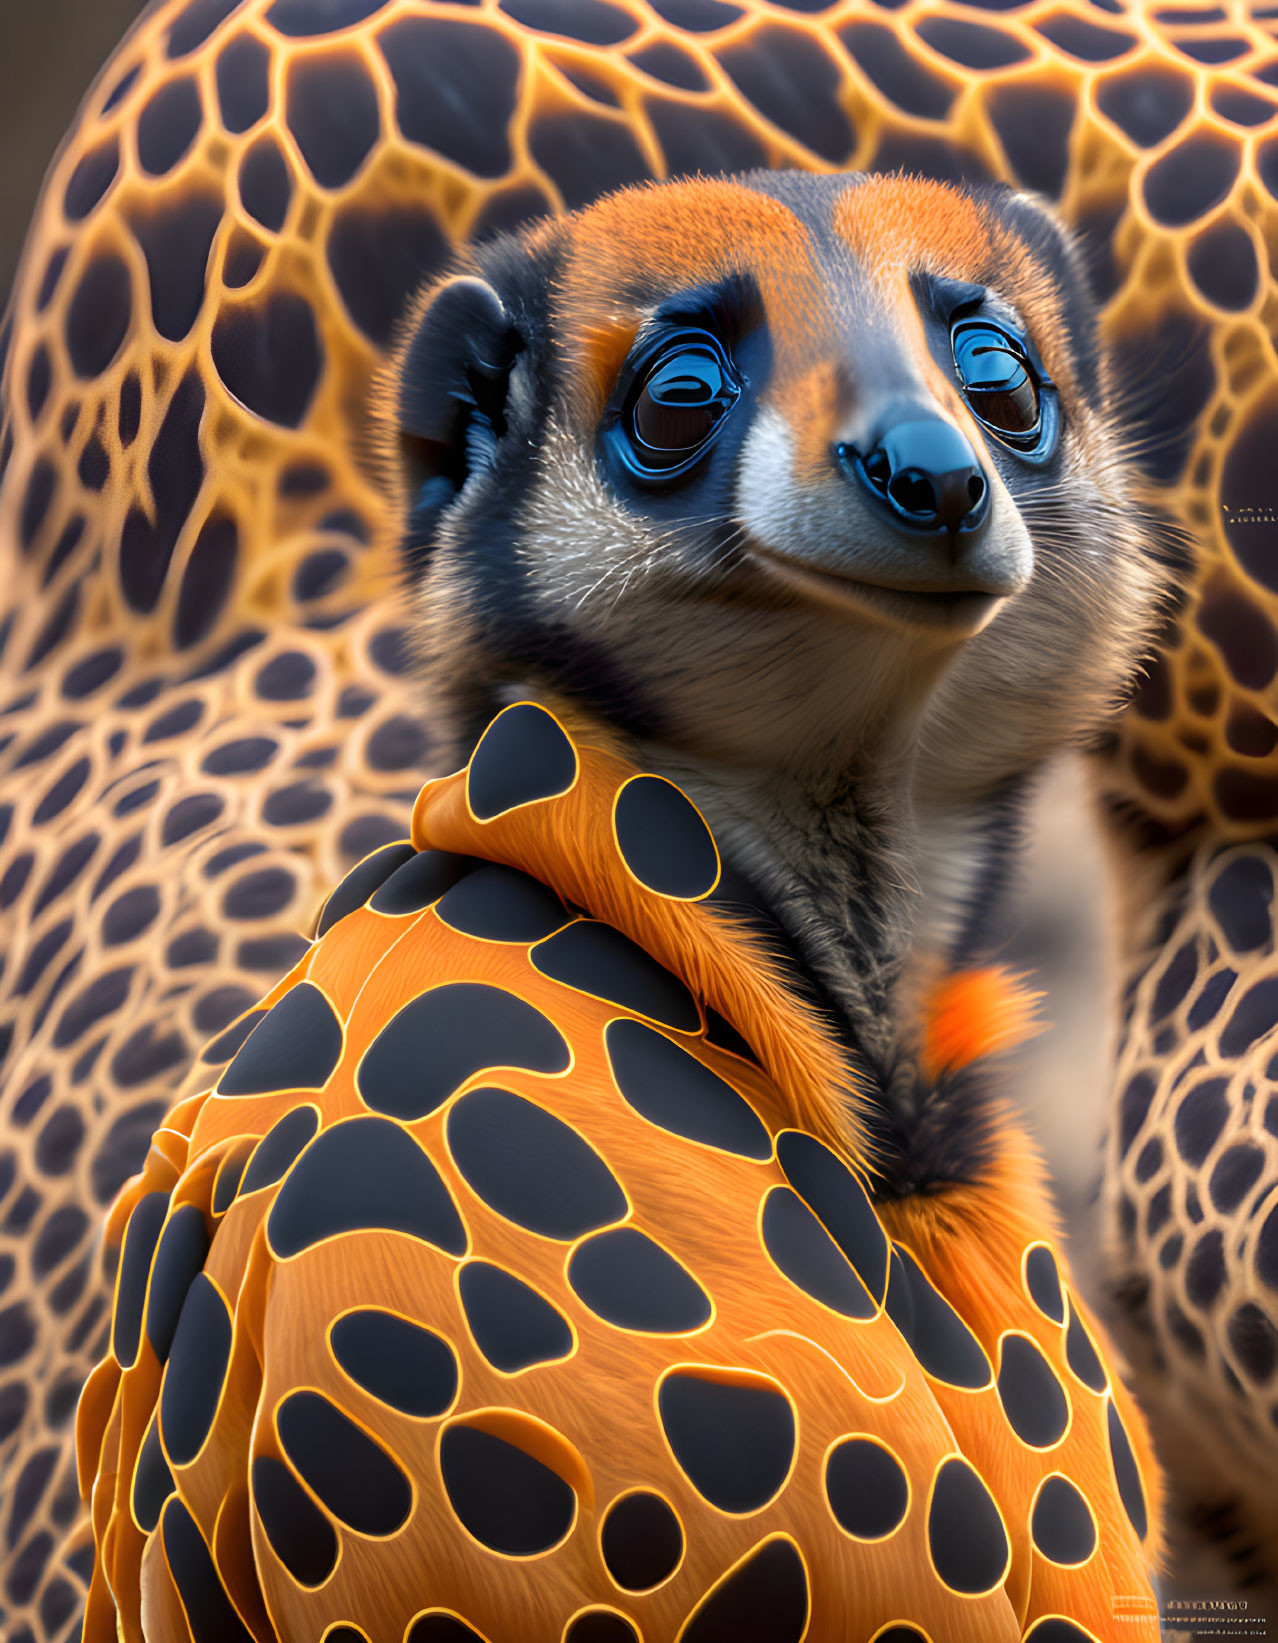 Lemur with Human-Like Eyes in Orange Cloak on Matching Background